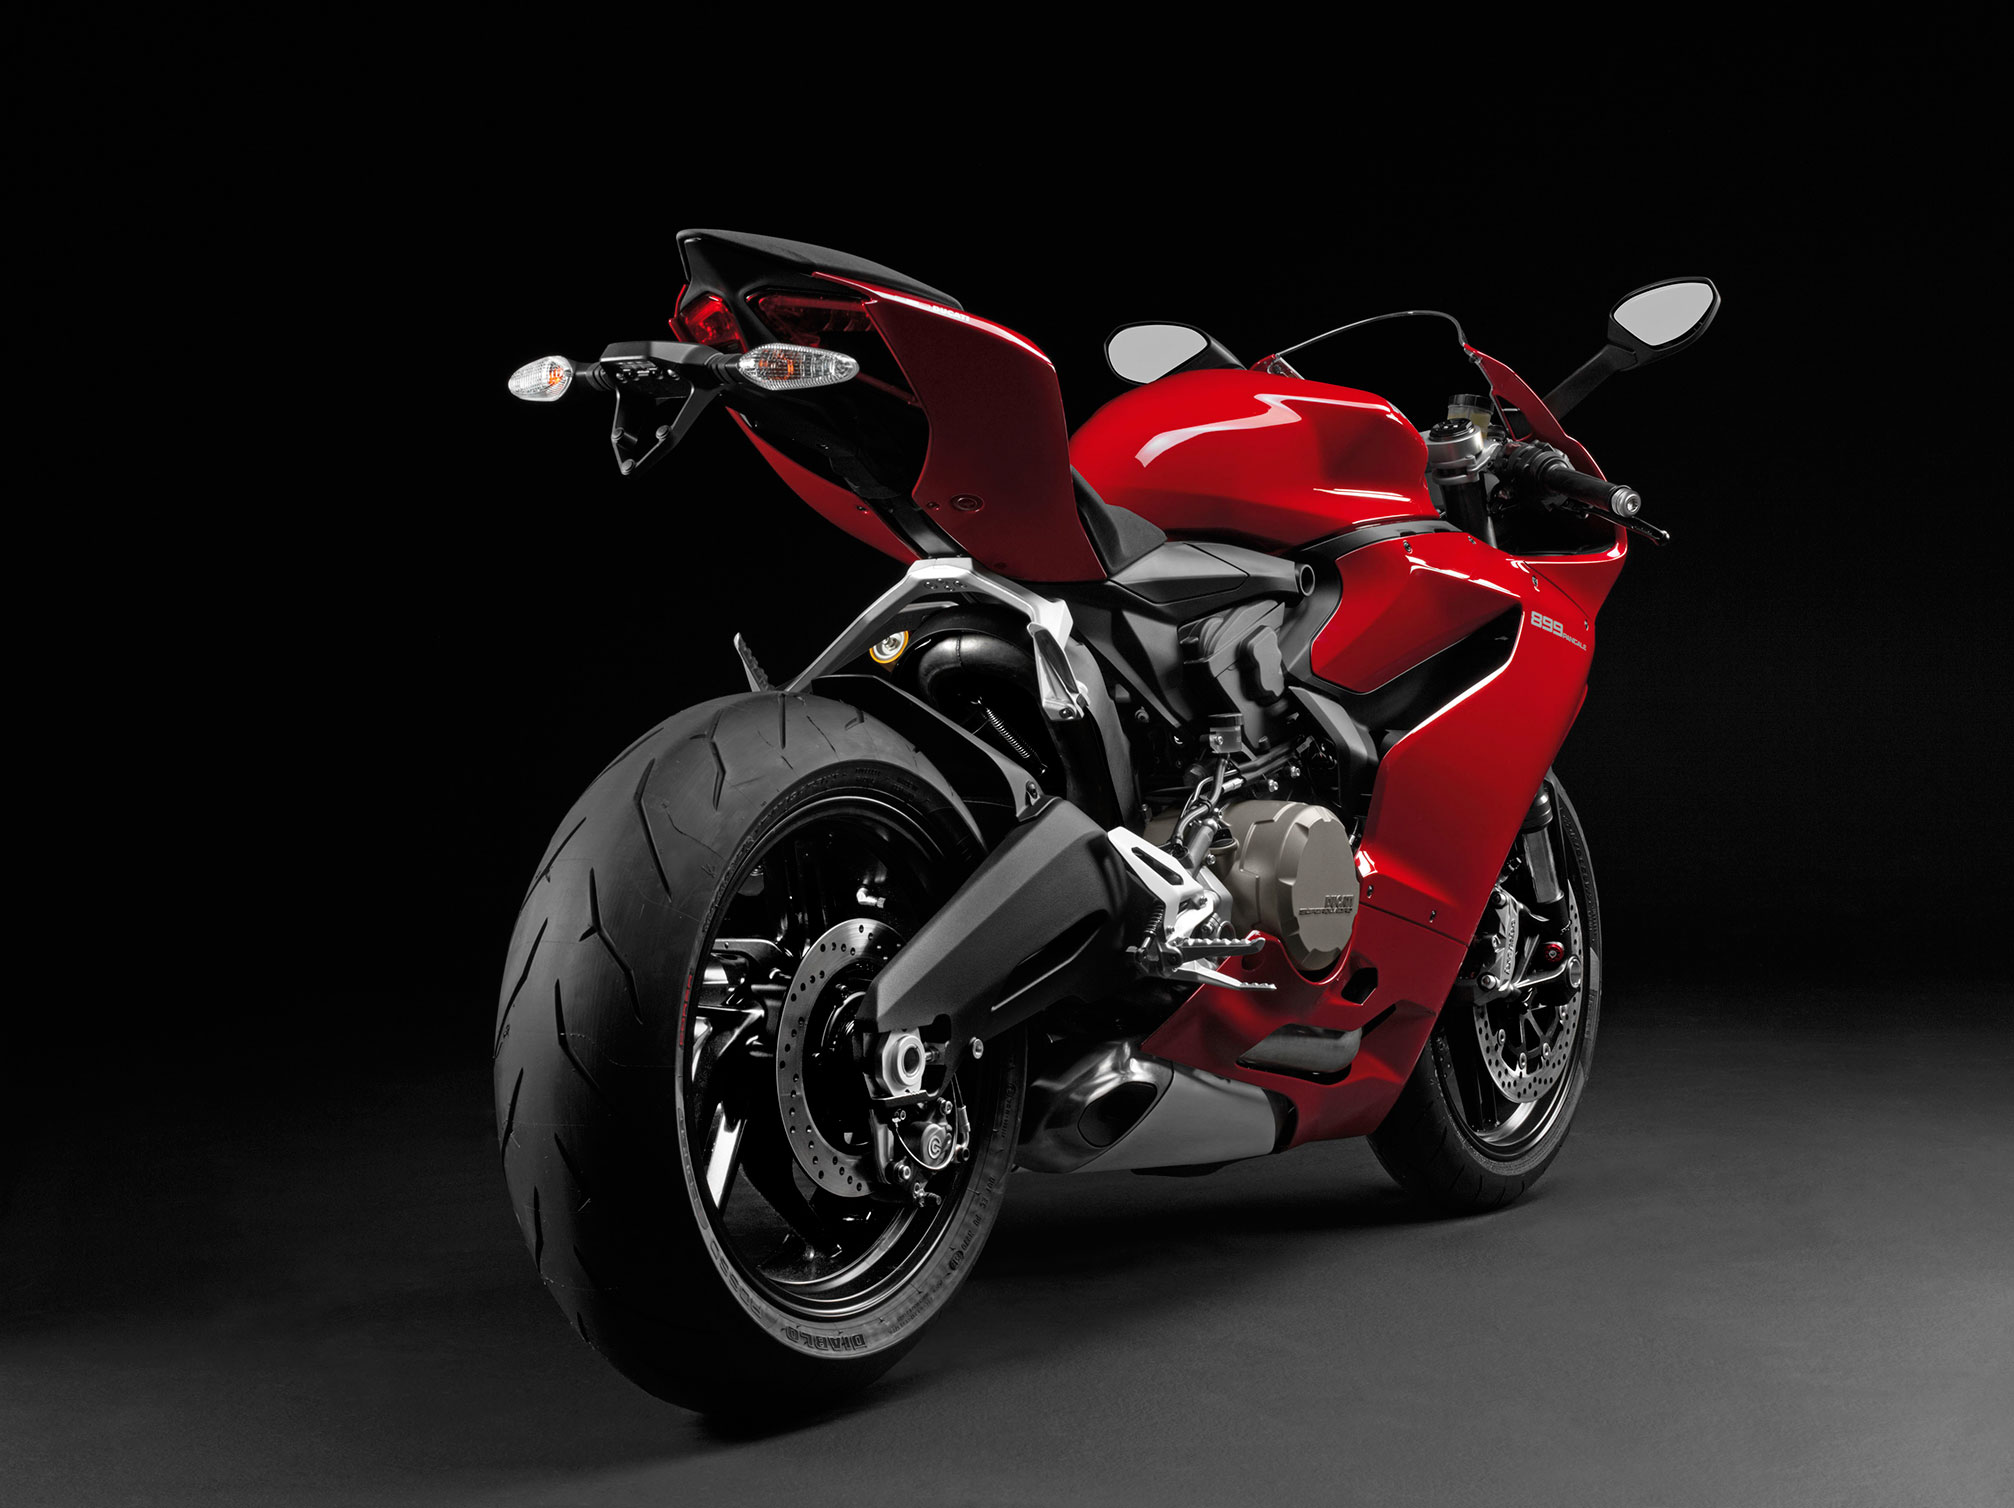 2014 Ducati Superbike 899 Panigale g wallpaper 2014x1508 150896 2014x1508